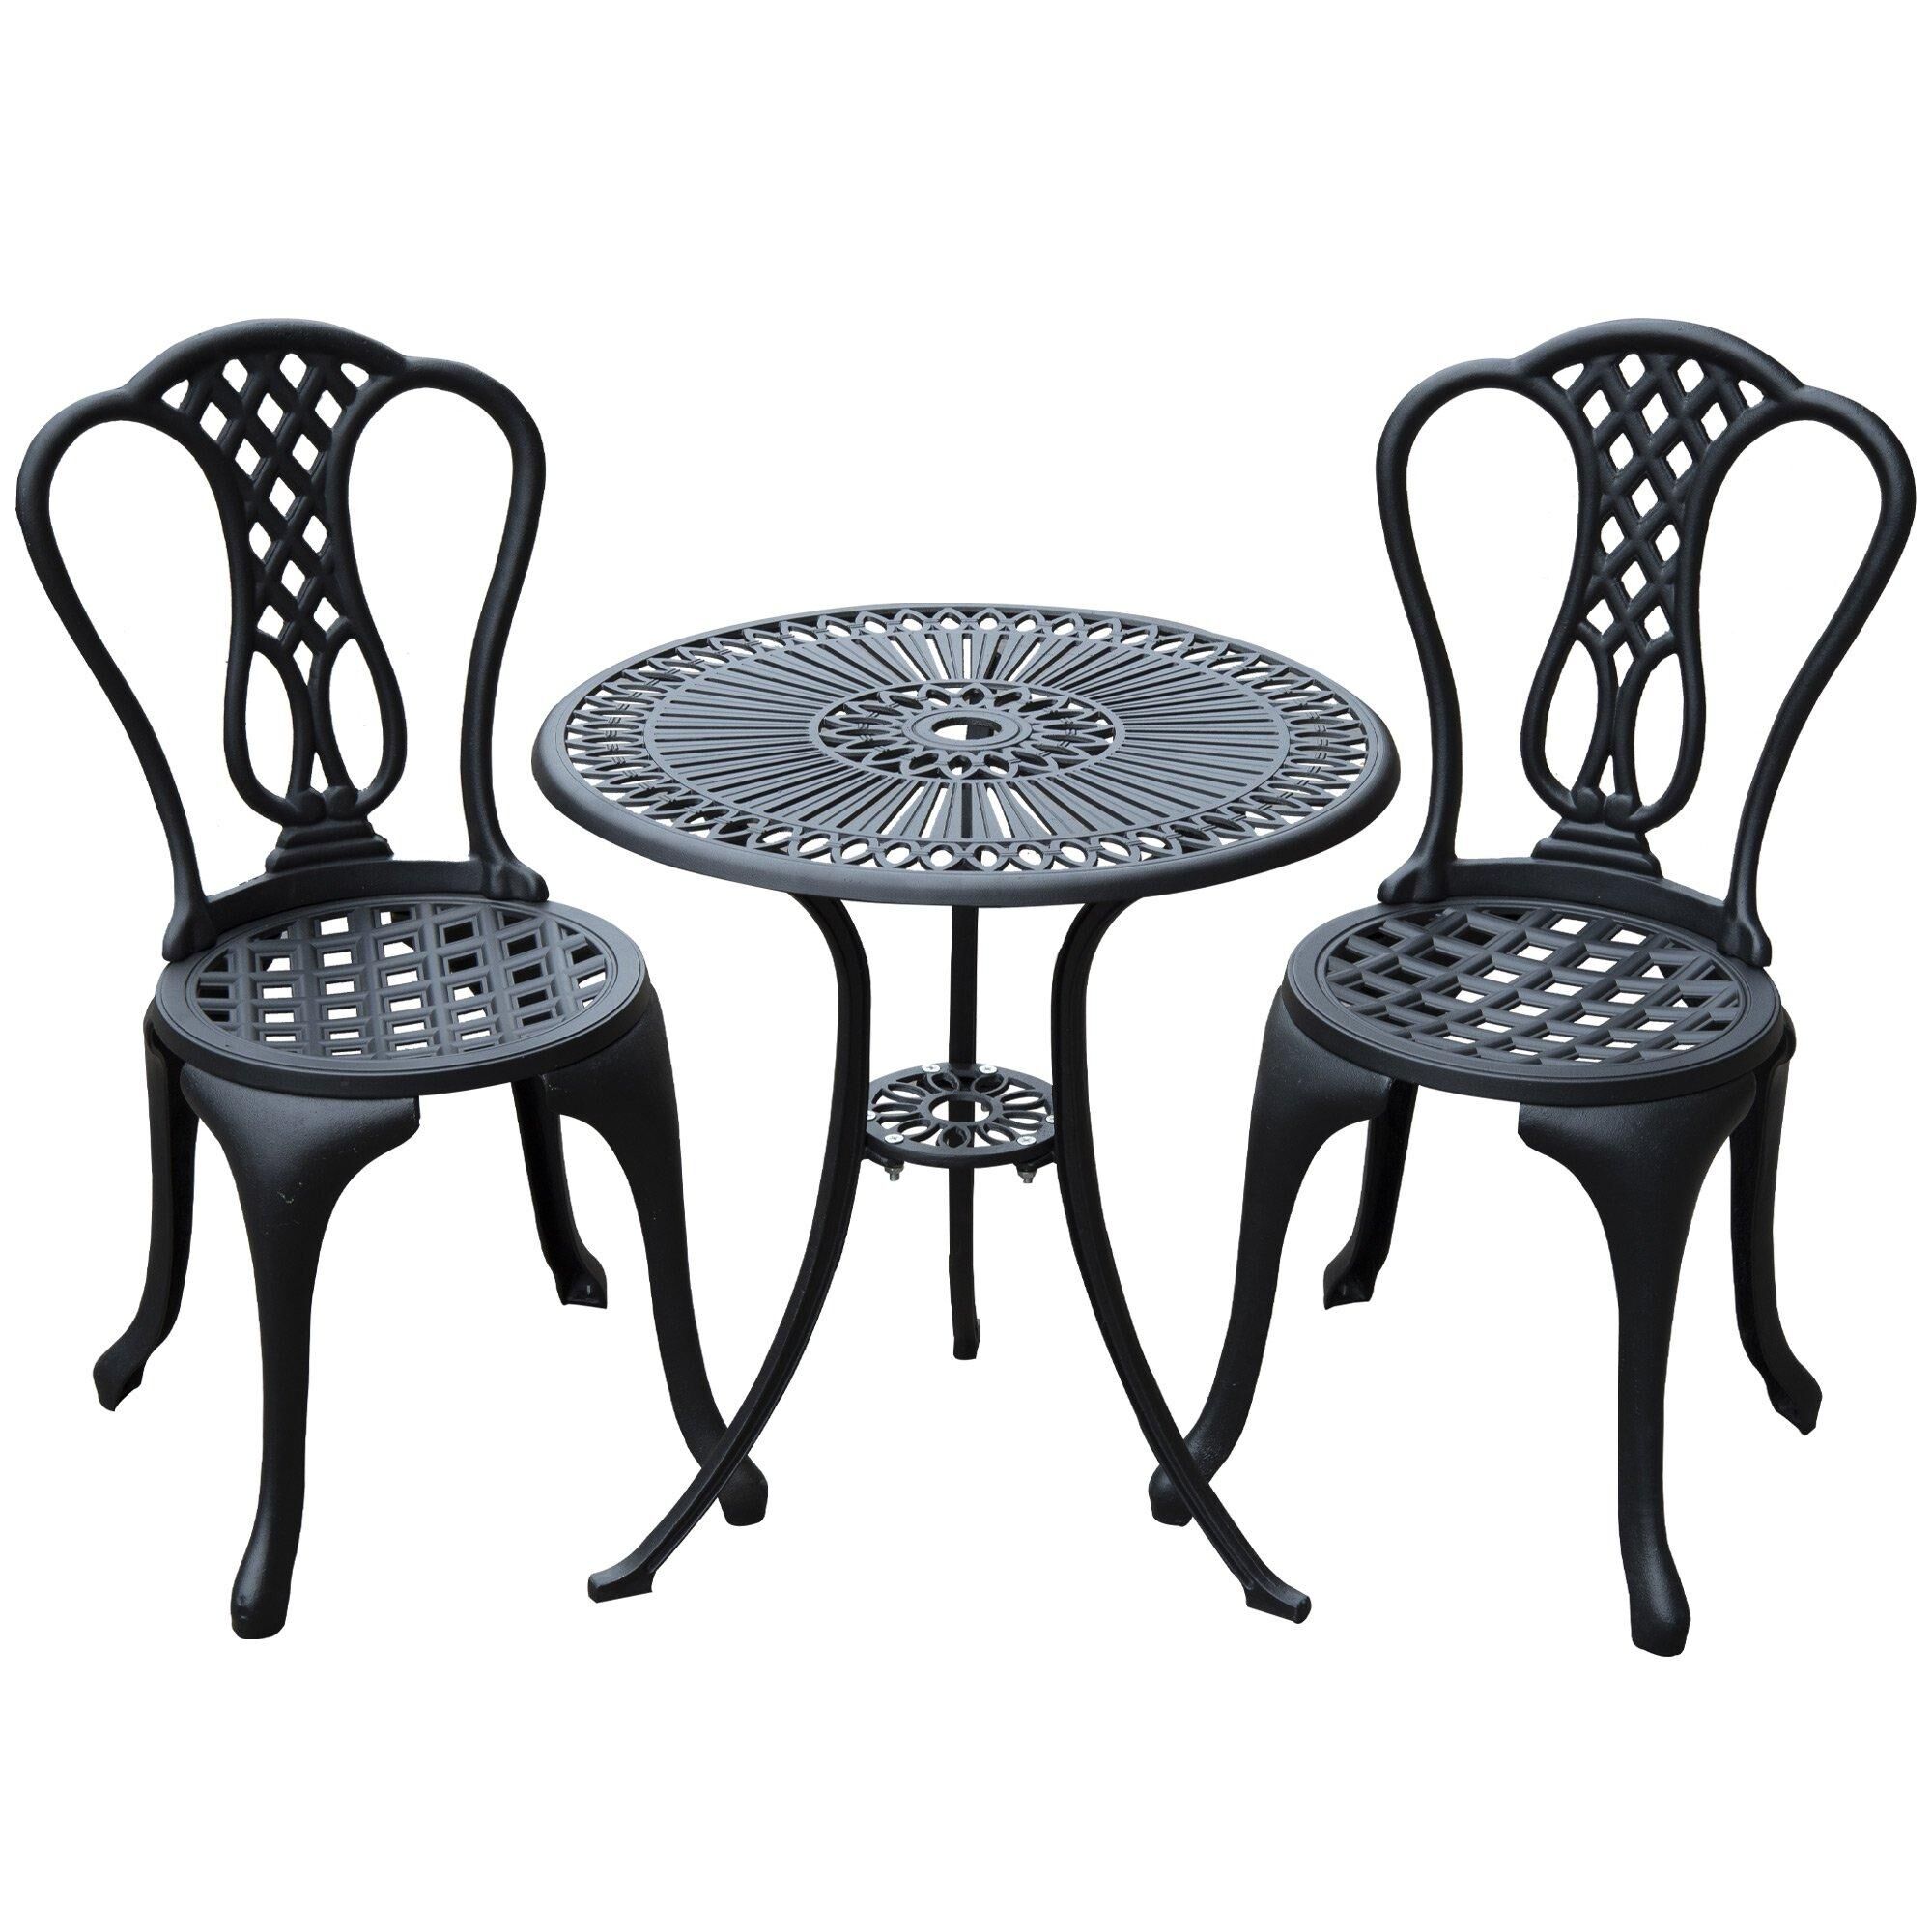 Outsunny Garden Bistro Set Outdoor Table Chairs Aluminium Patio Lawn Furniture